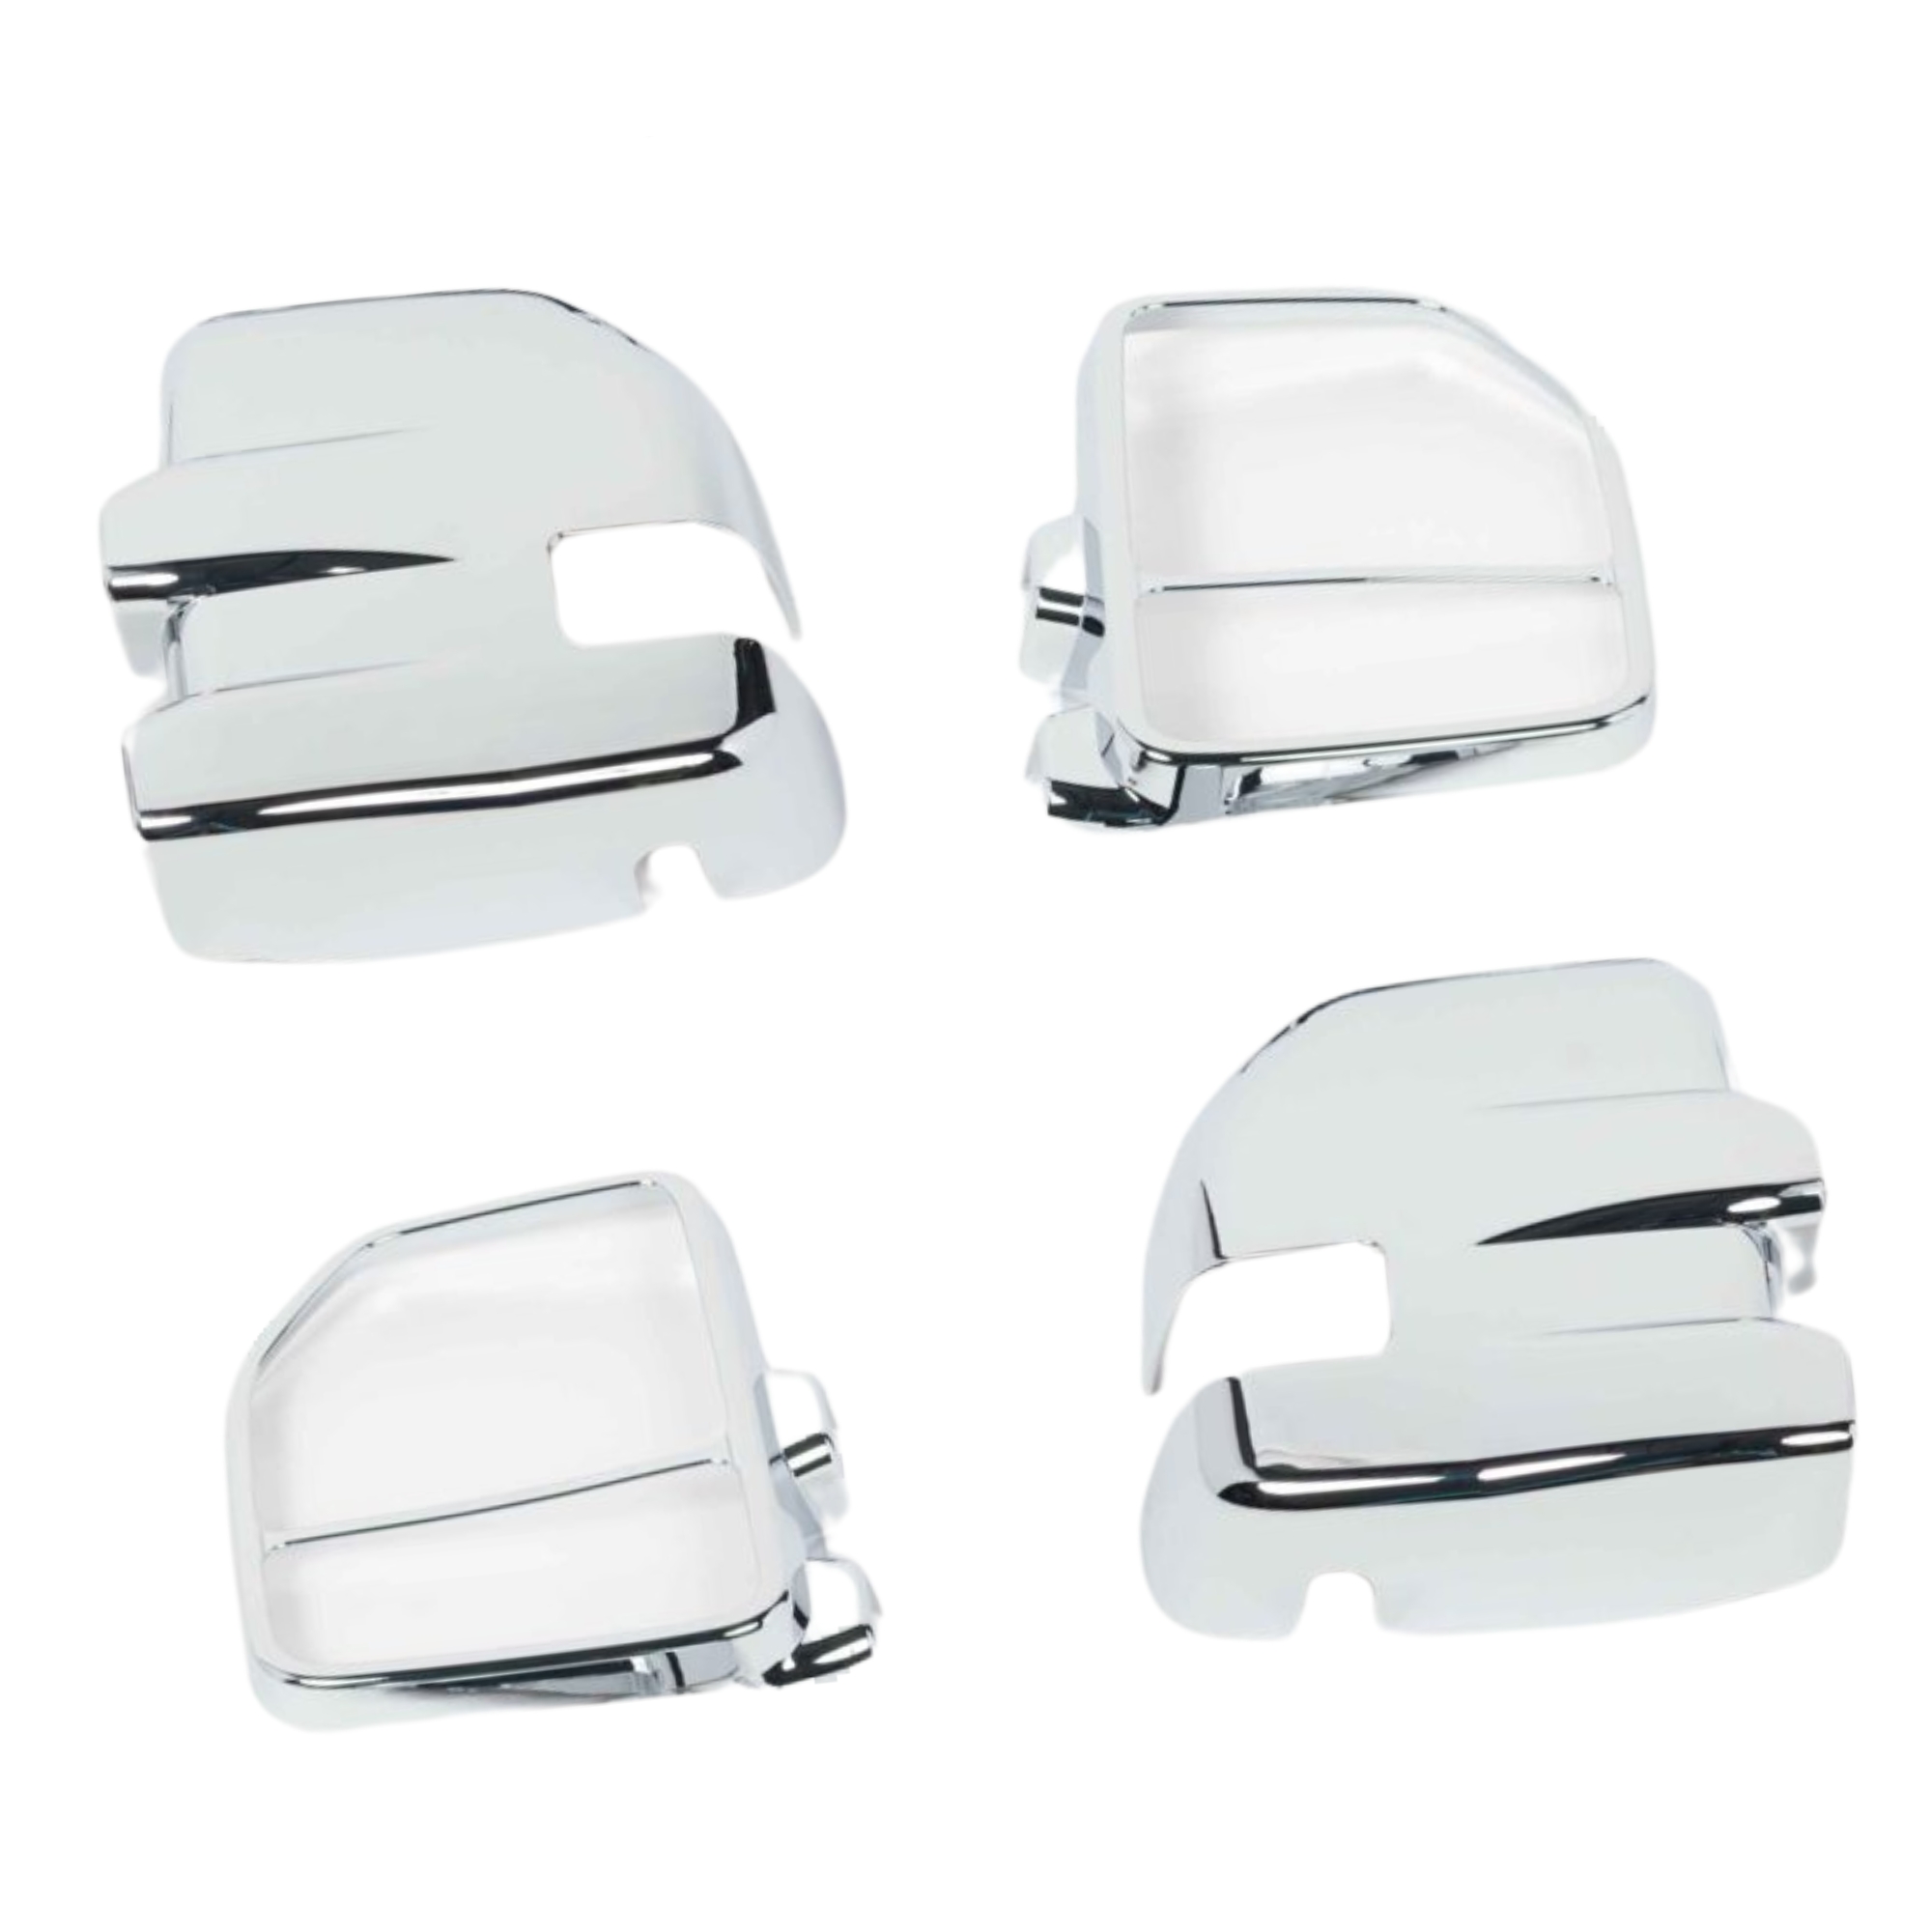 401162 - Putco Chrome Mirror Covers - Fits Ford F150, F250, F350